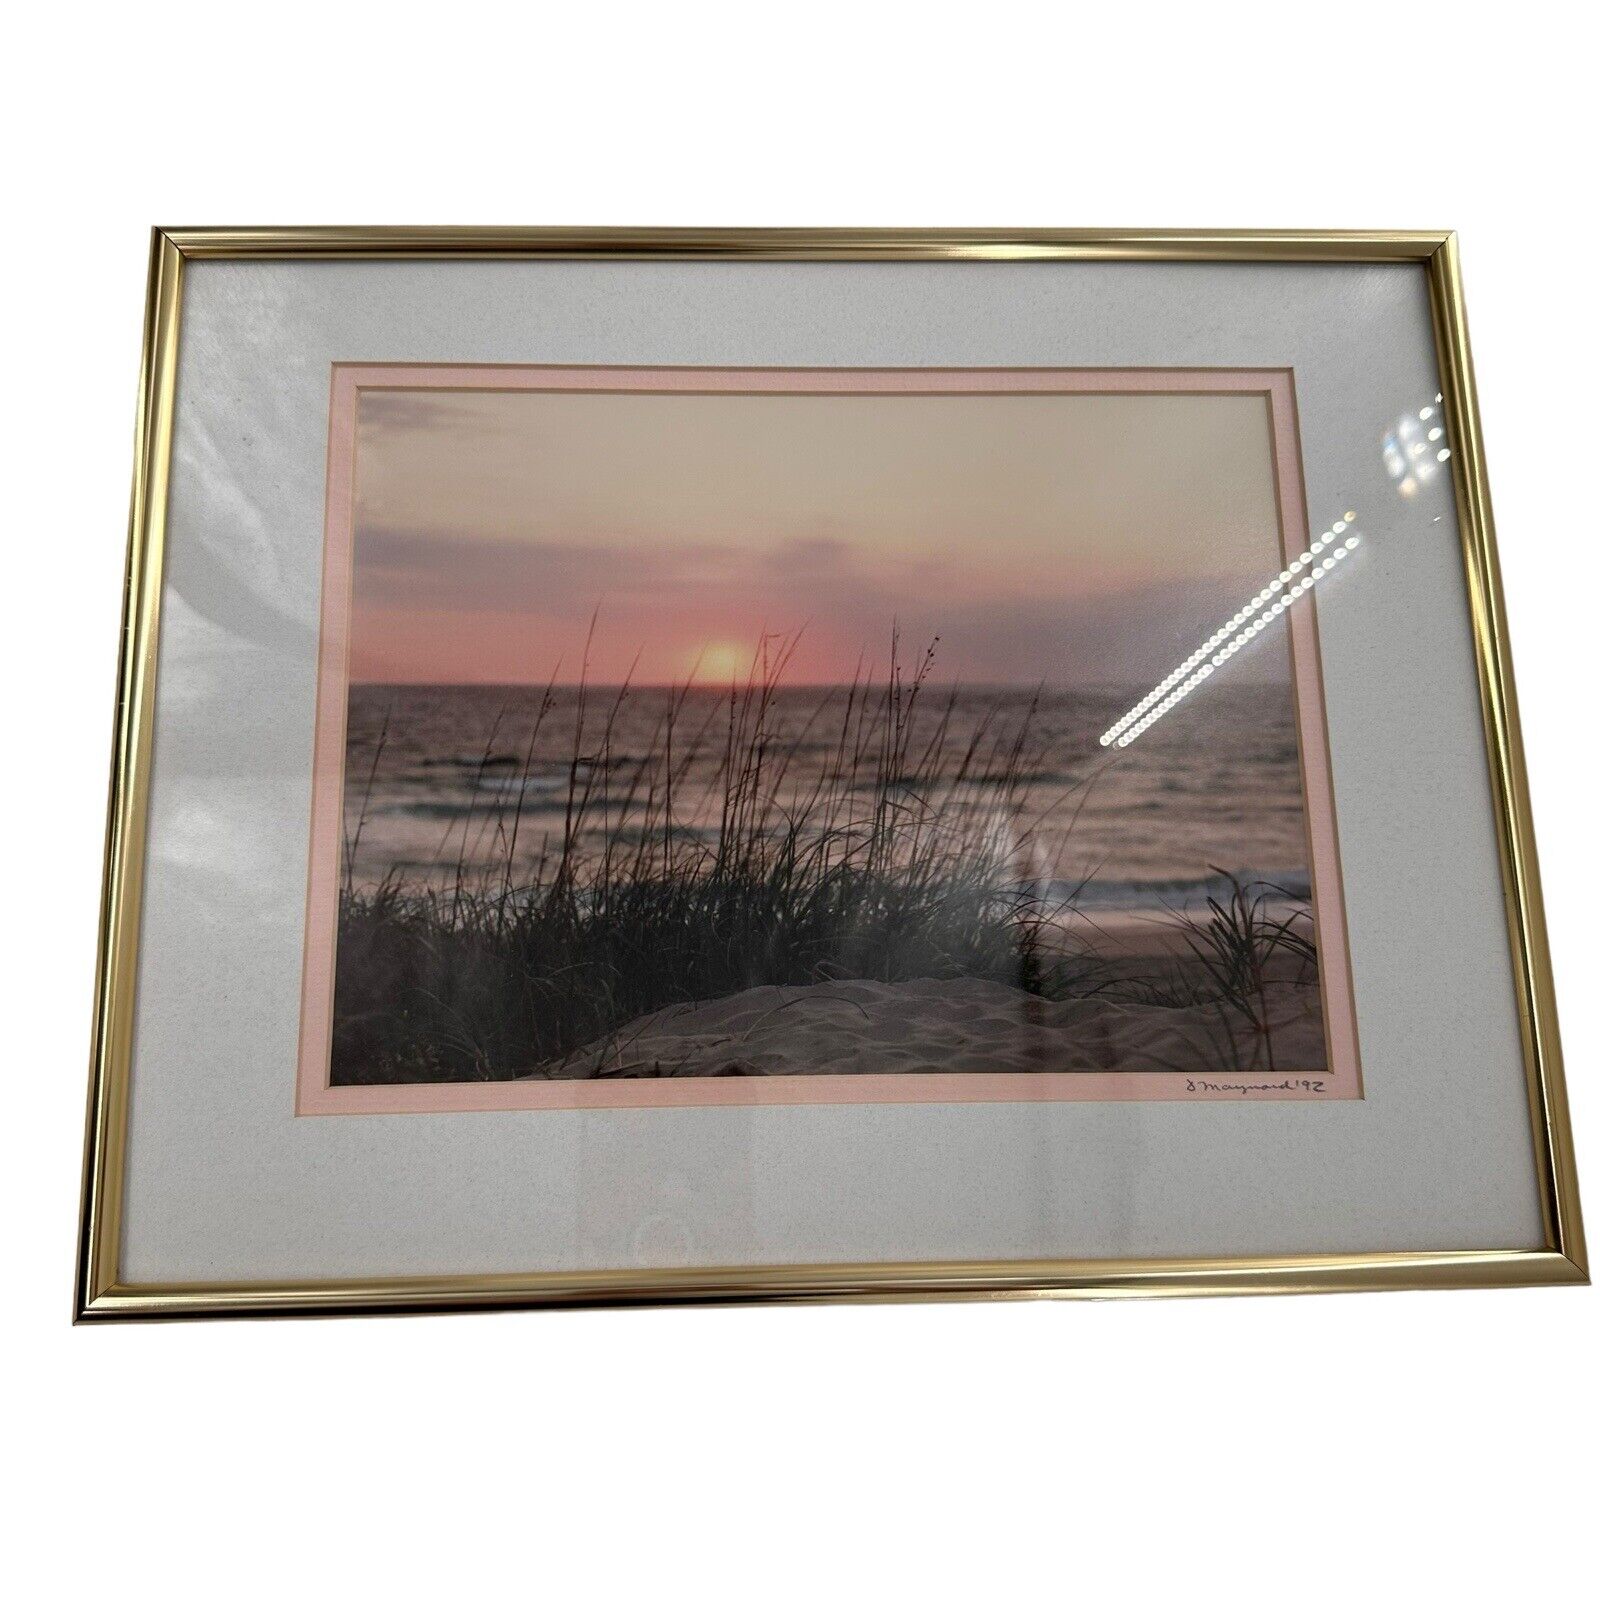 Vtg David Maynard Signed Gold Framed OCEAN Beach Photograph 1993 Pink Sunrise